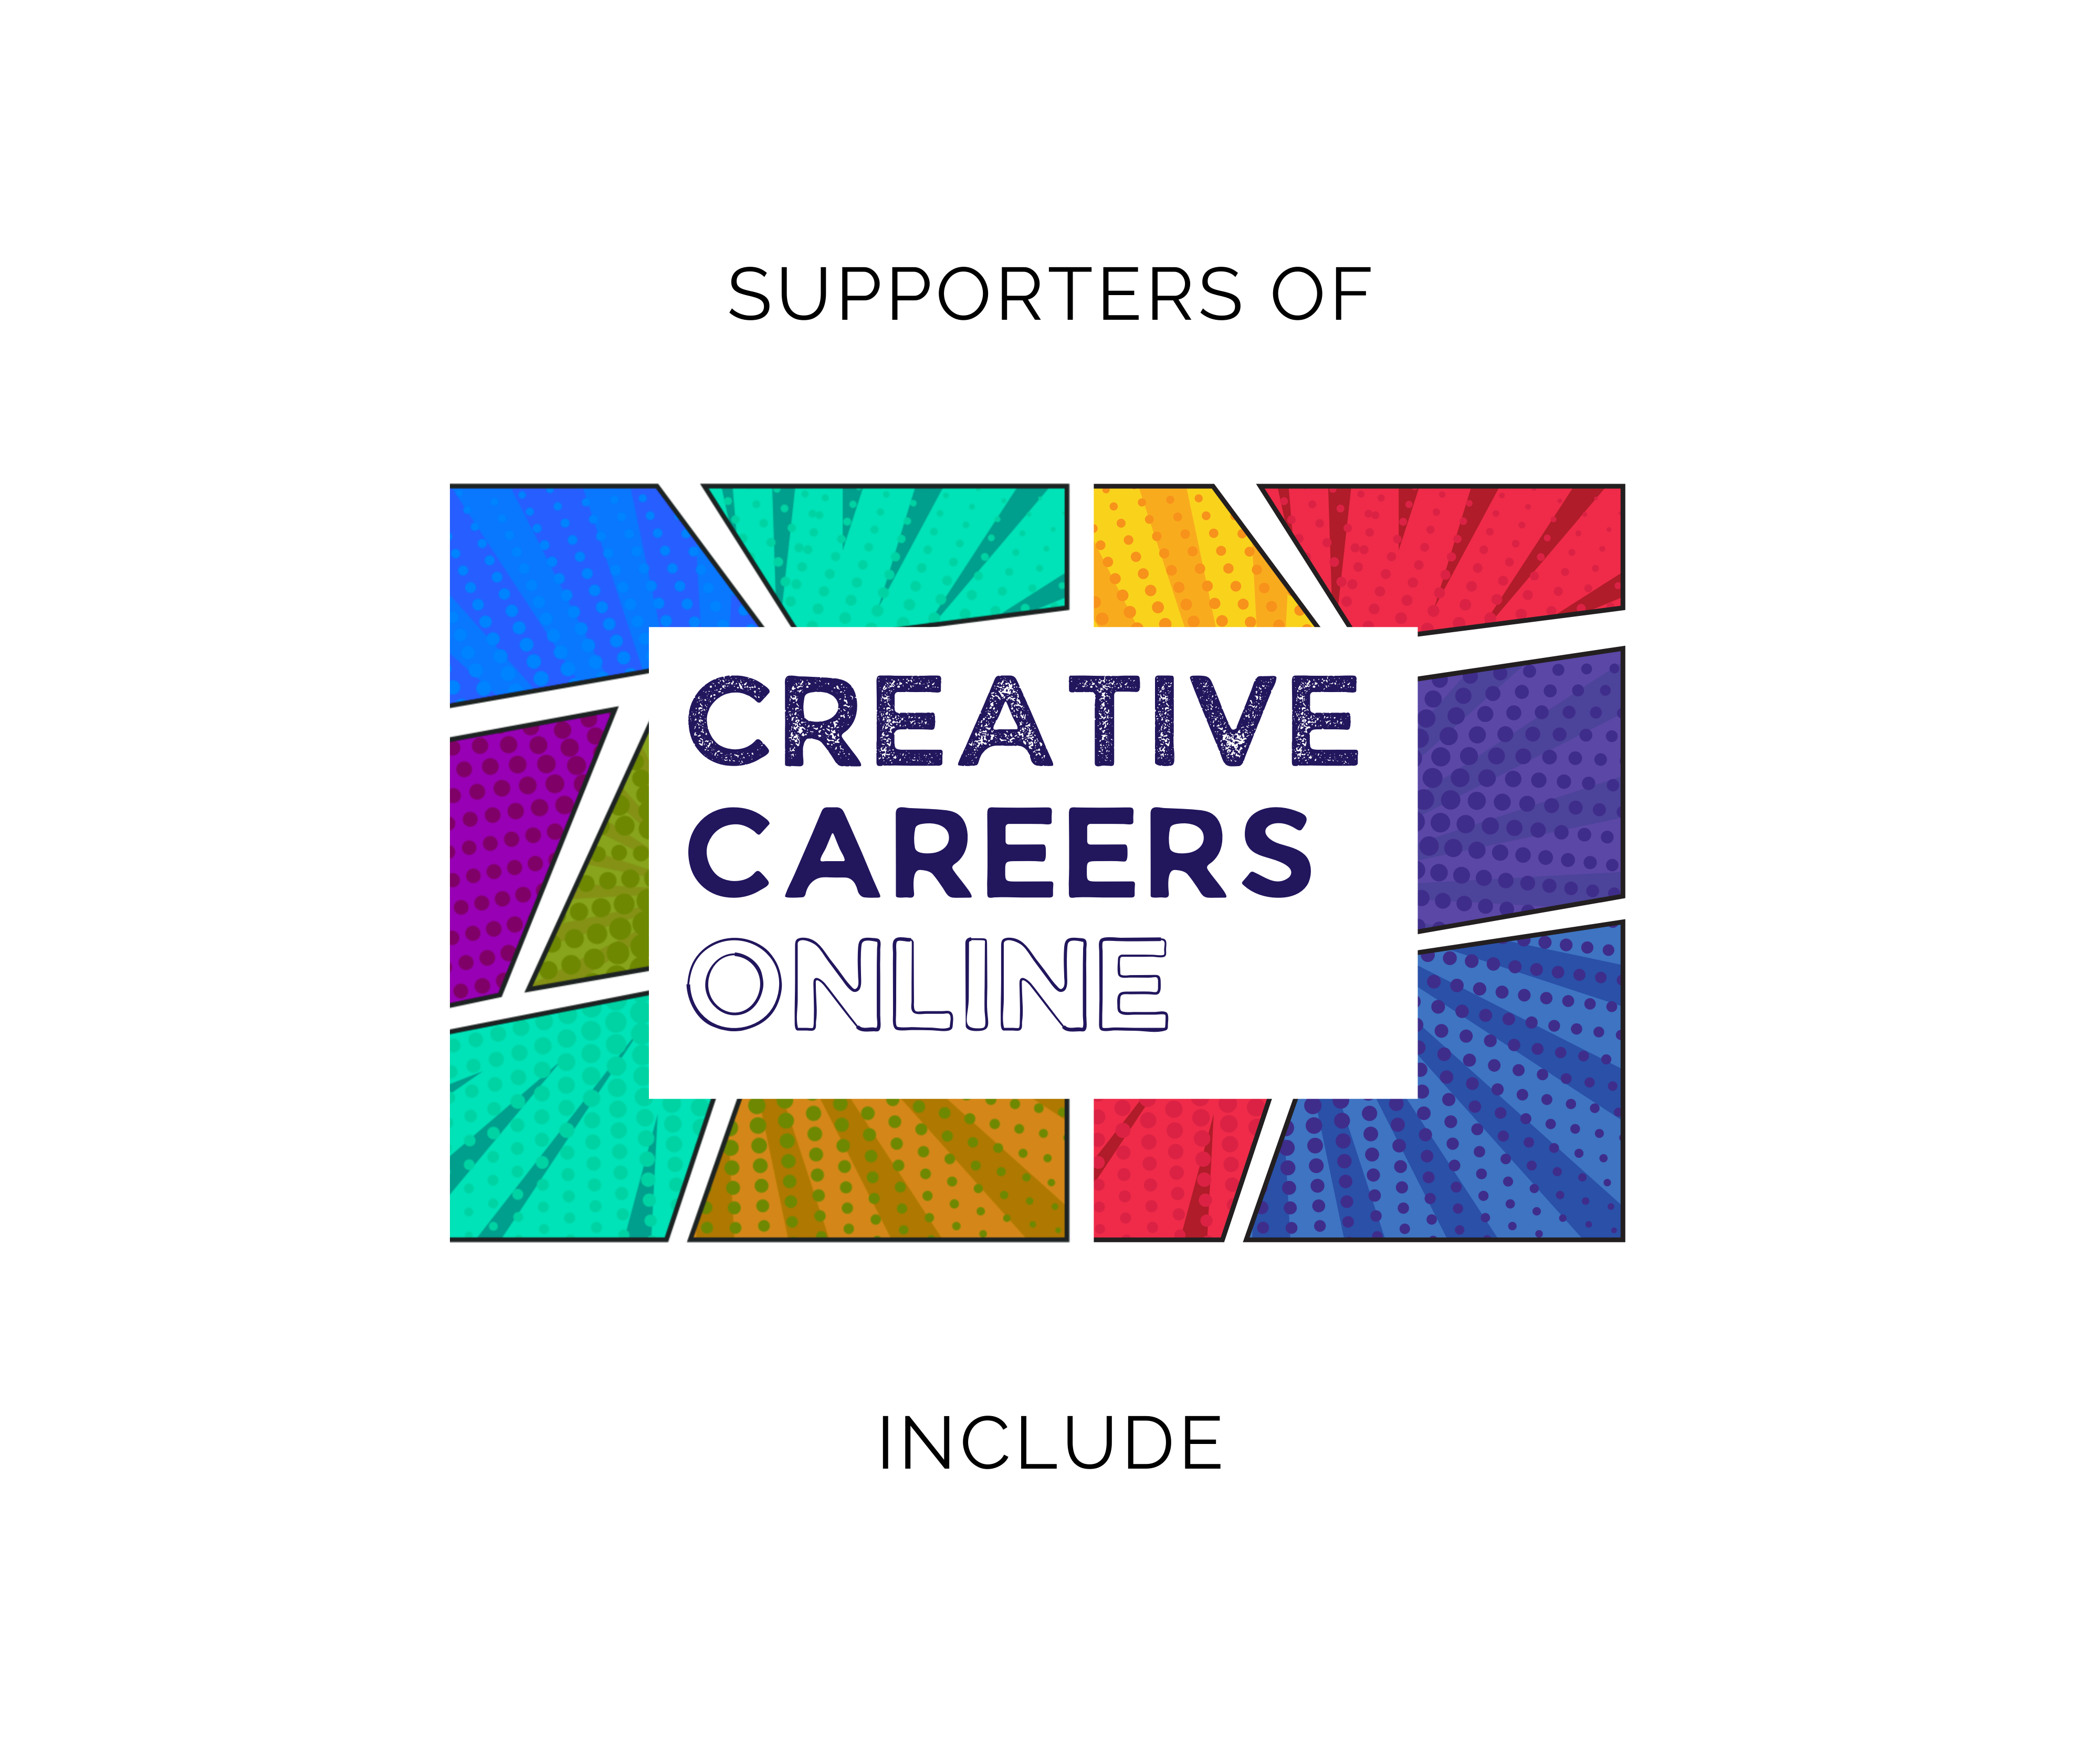 Creative Careers Online Supporters